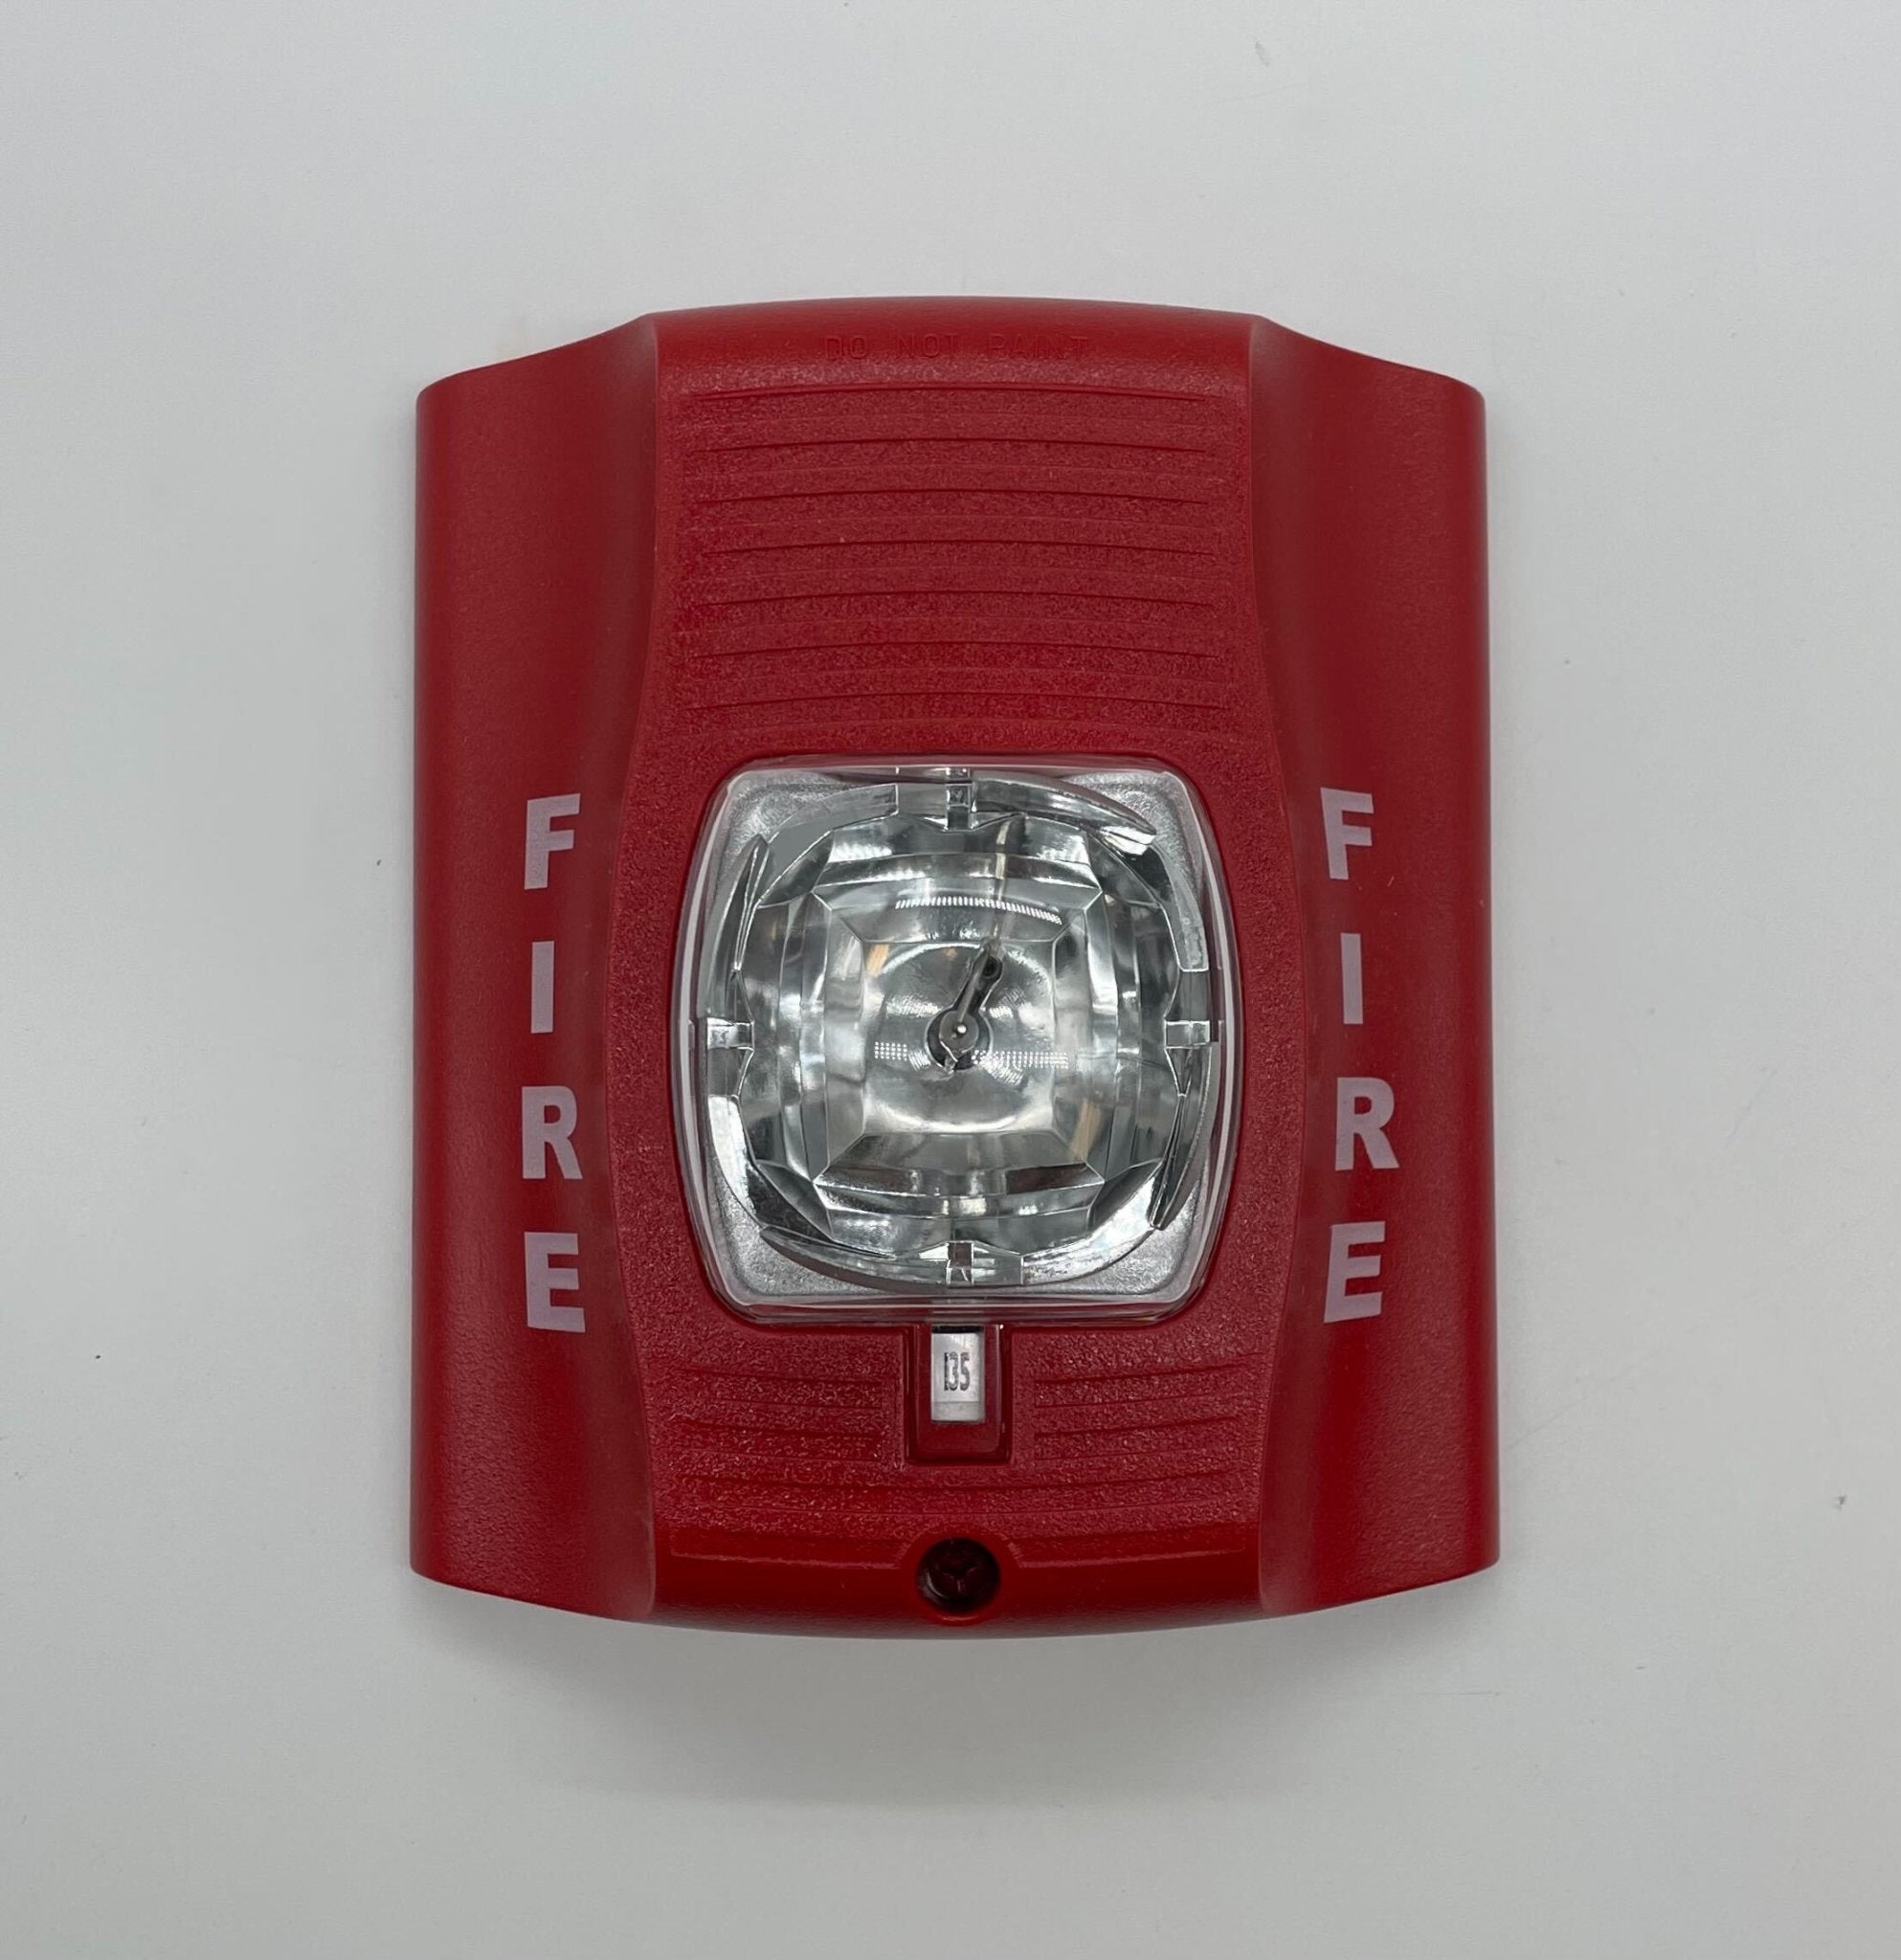 System Sensor SRHK - The Fire Alarm Supplier